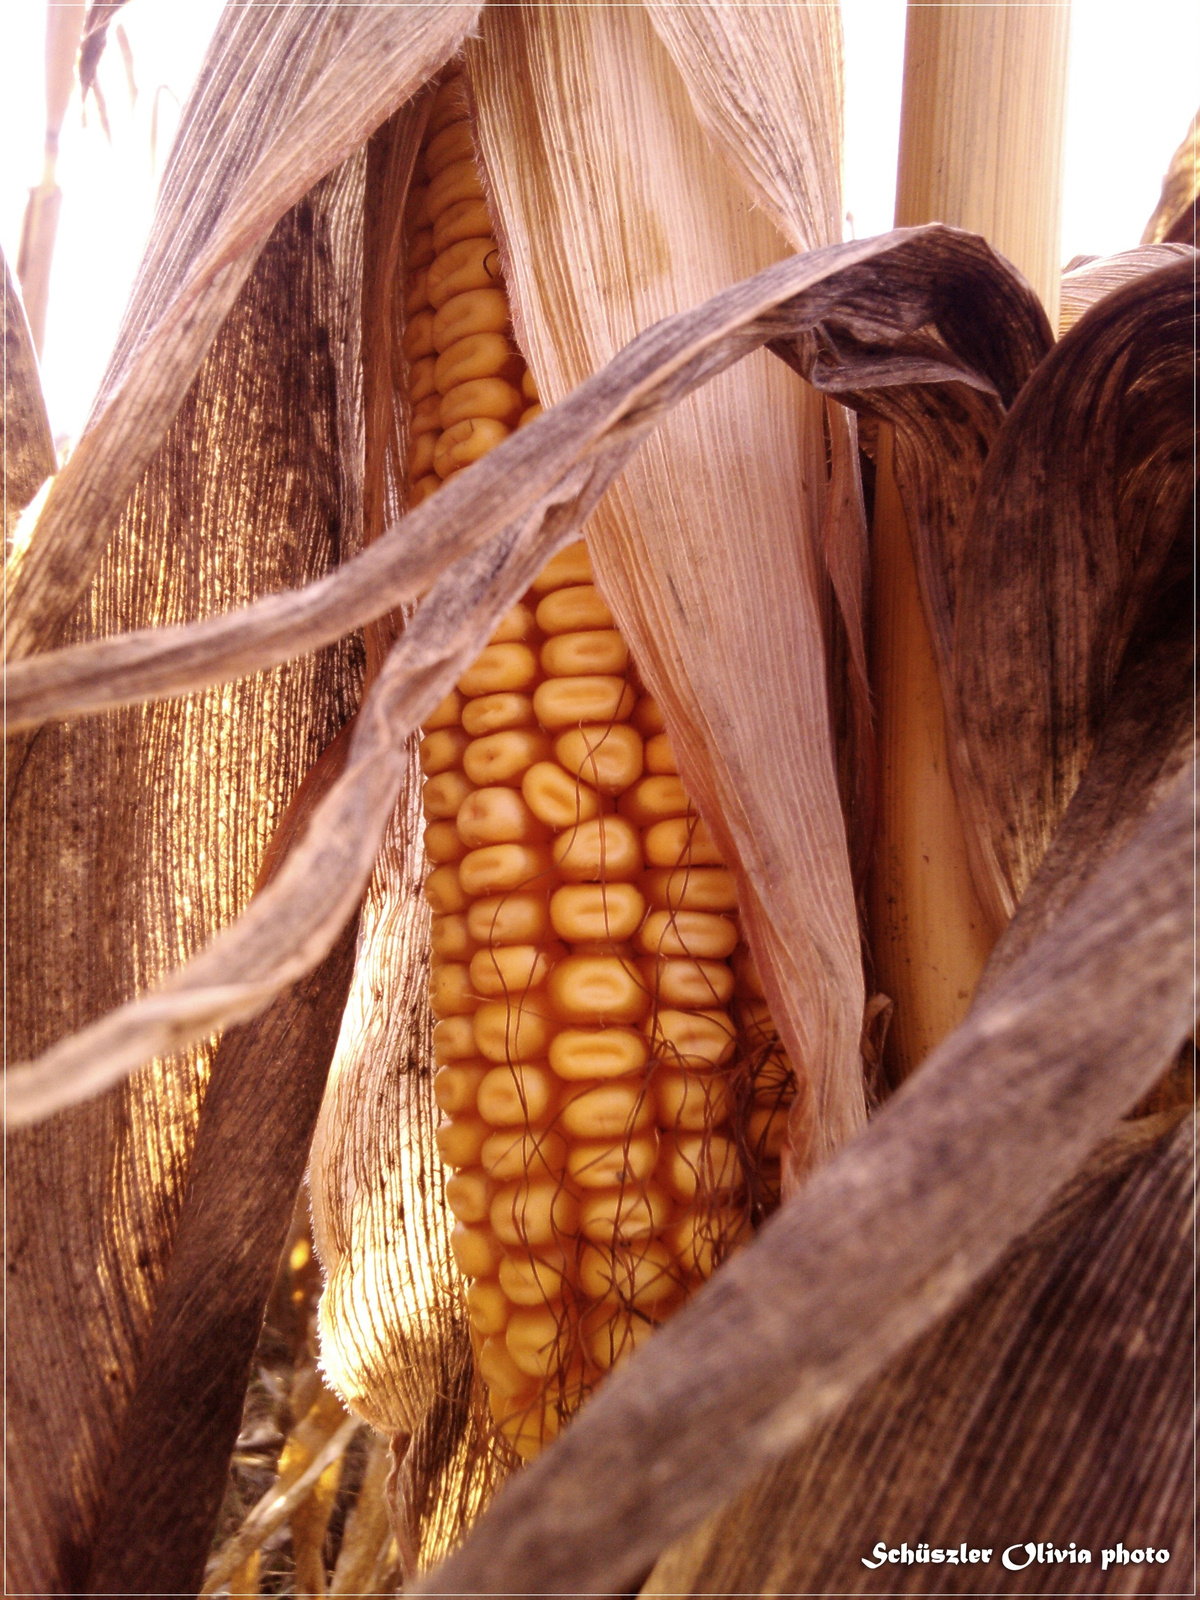 Kukoricaszemek